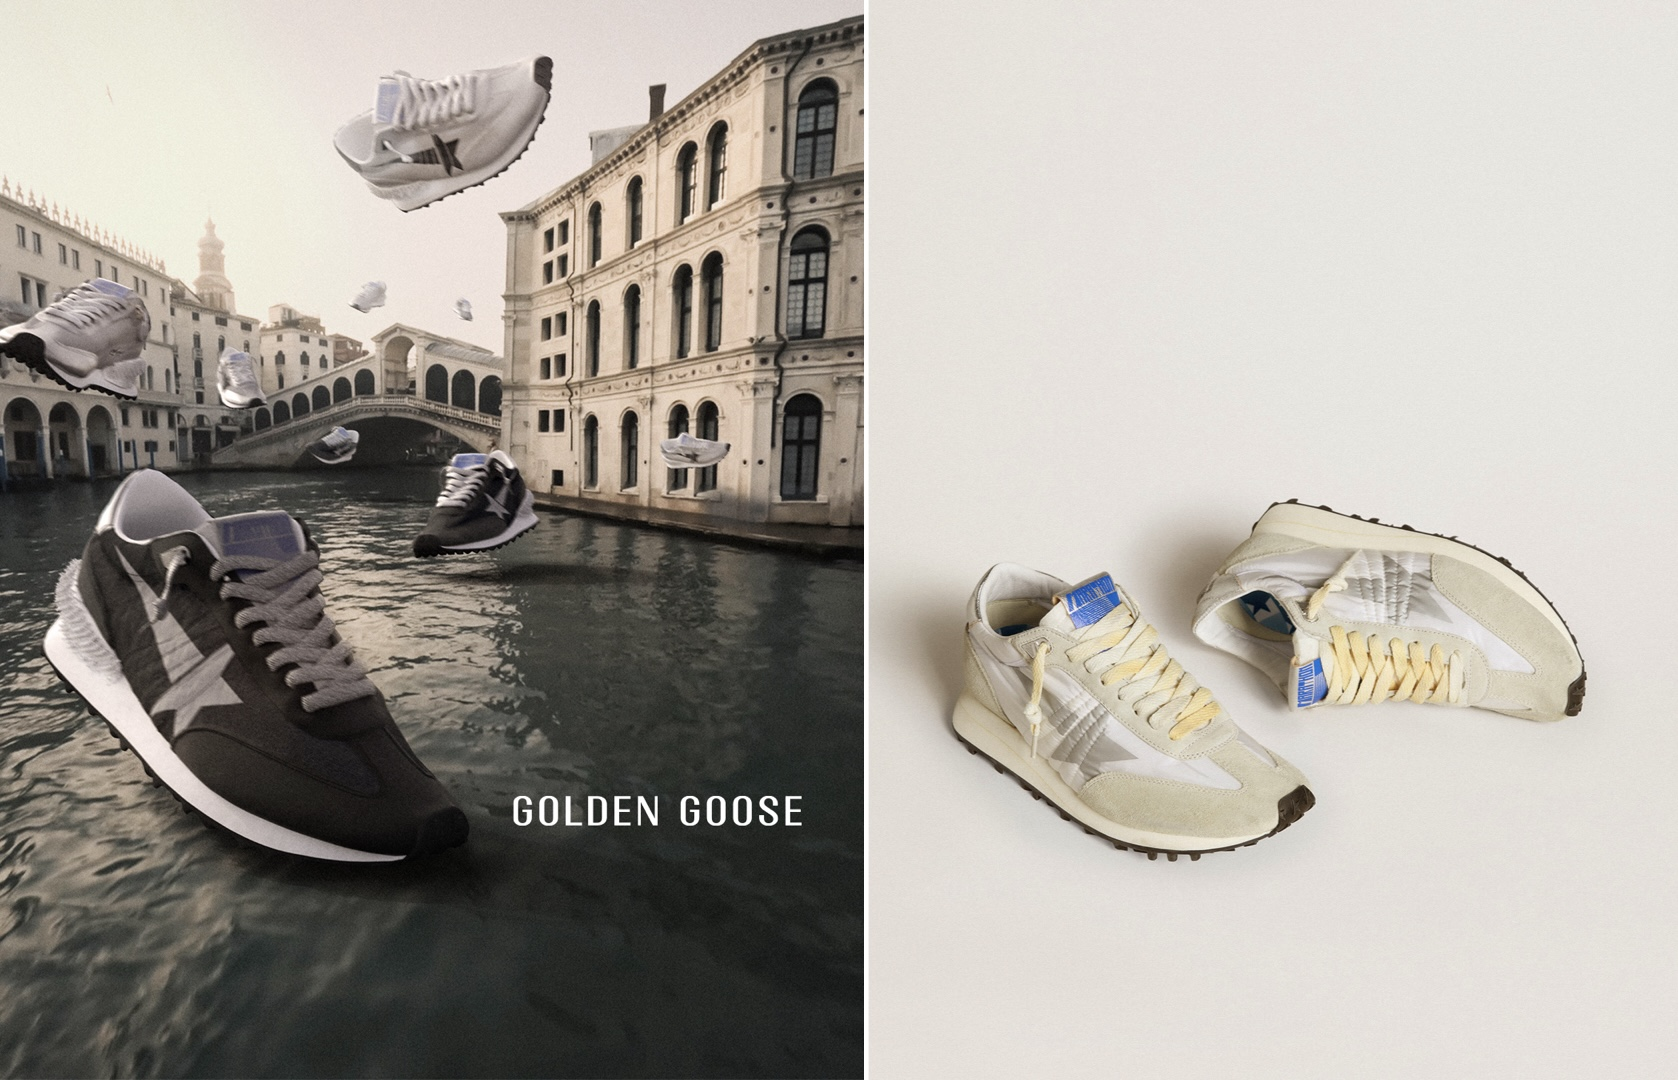 Golden Goose เปิดตัวแคมเปญ CGI สุดล้ำ นำเสนอสนีกเกอร์รุ่นใหม่ล่าสุดอย่าง Marathon